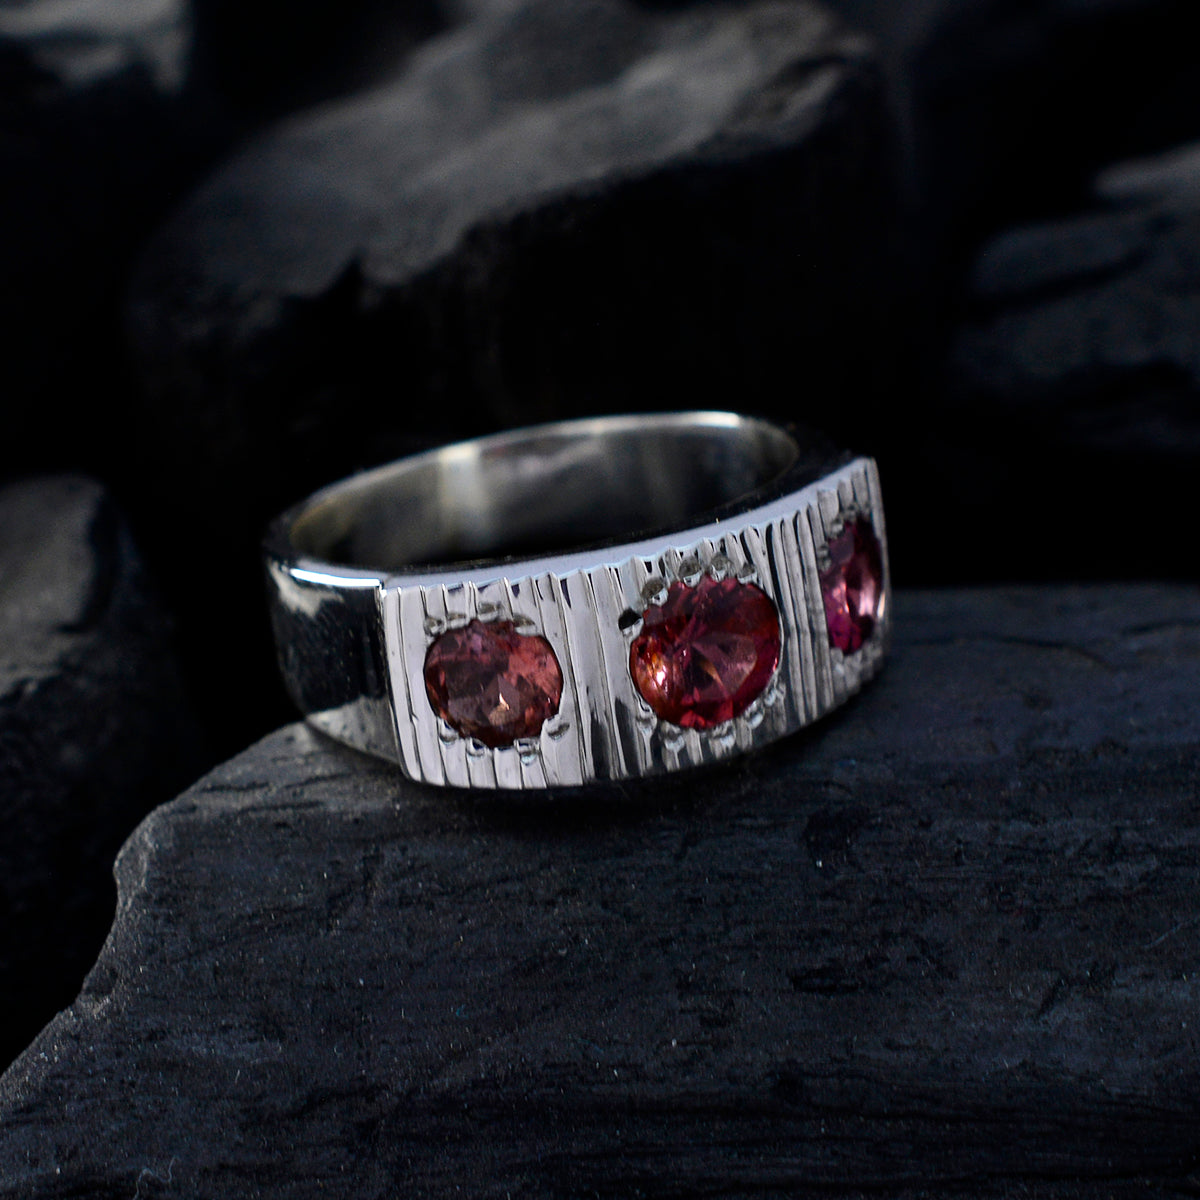 Riyo Engaging Gems Garnet 925 Silver Ring Design Your Own Jewelry